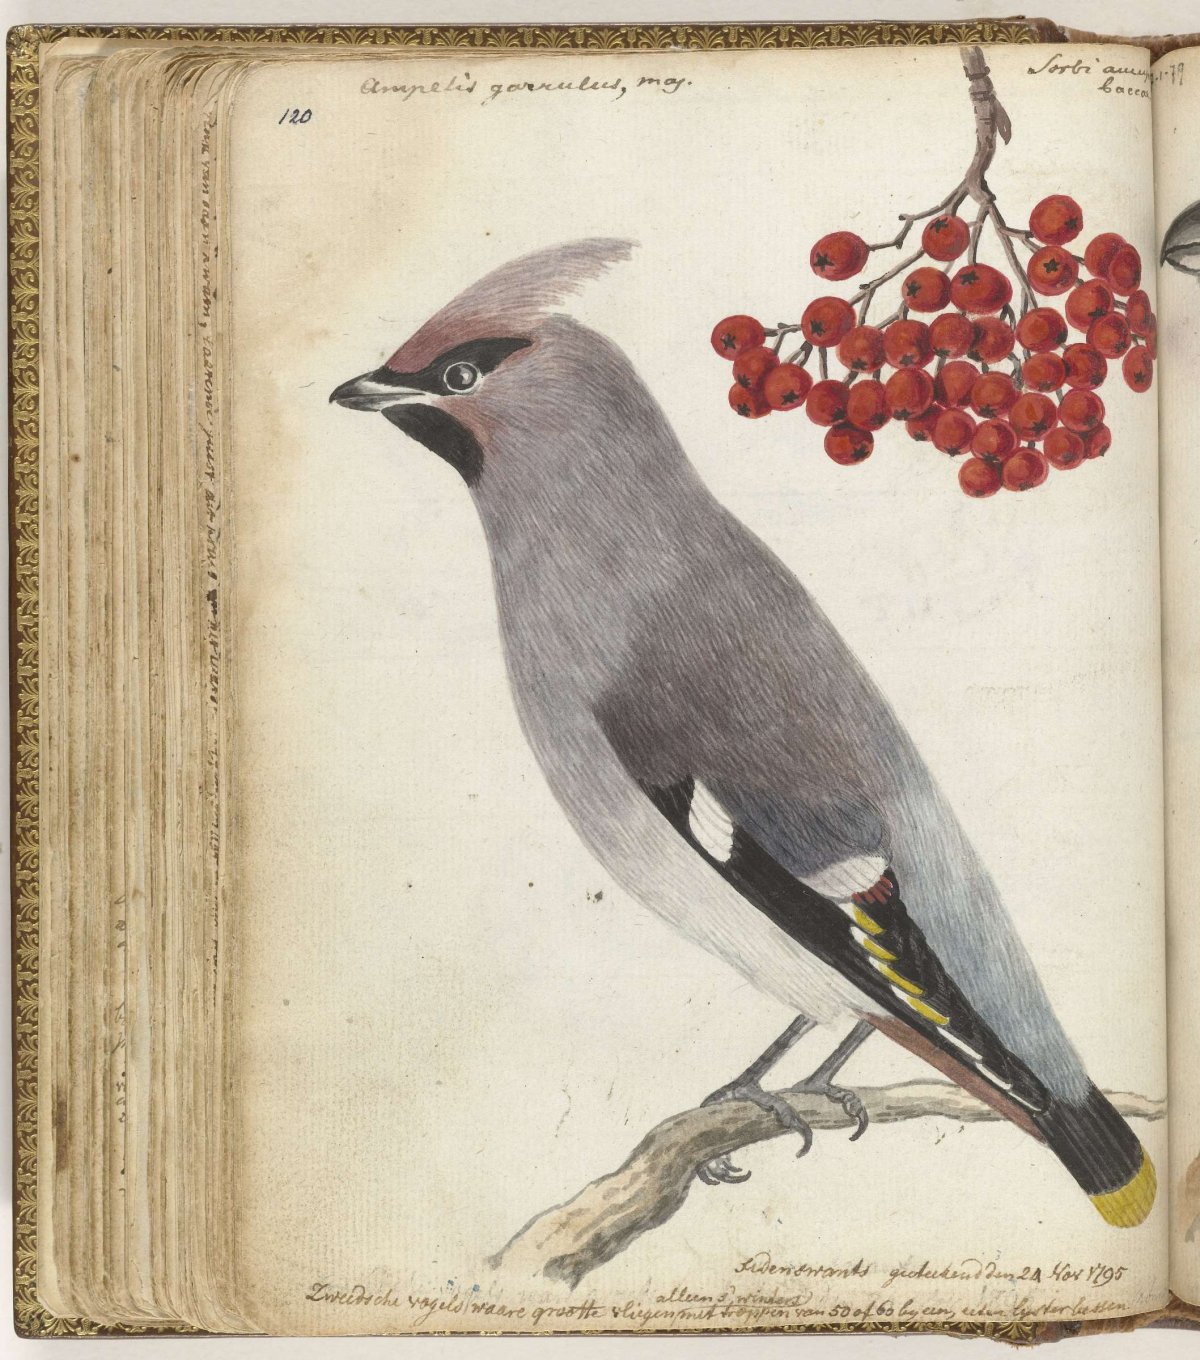 Swedish bird, Jan Brandes, 1795